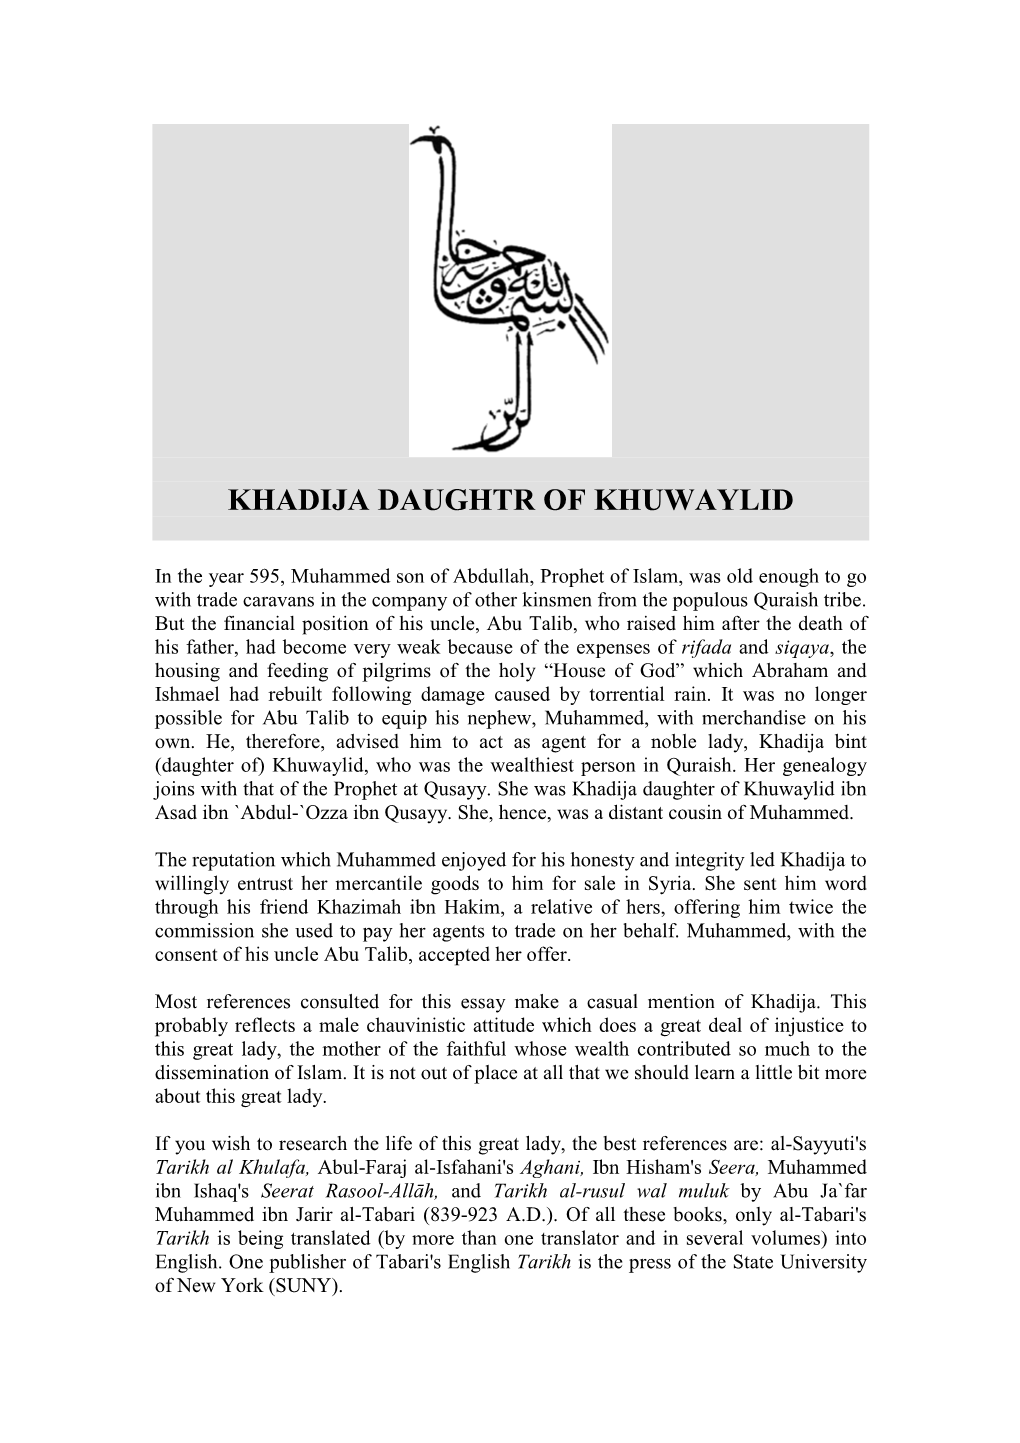 Khadija Daughtr of Khuwaylid